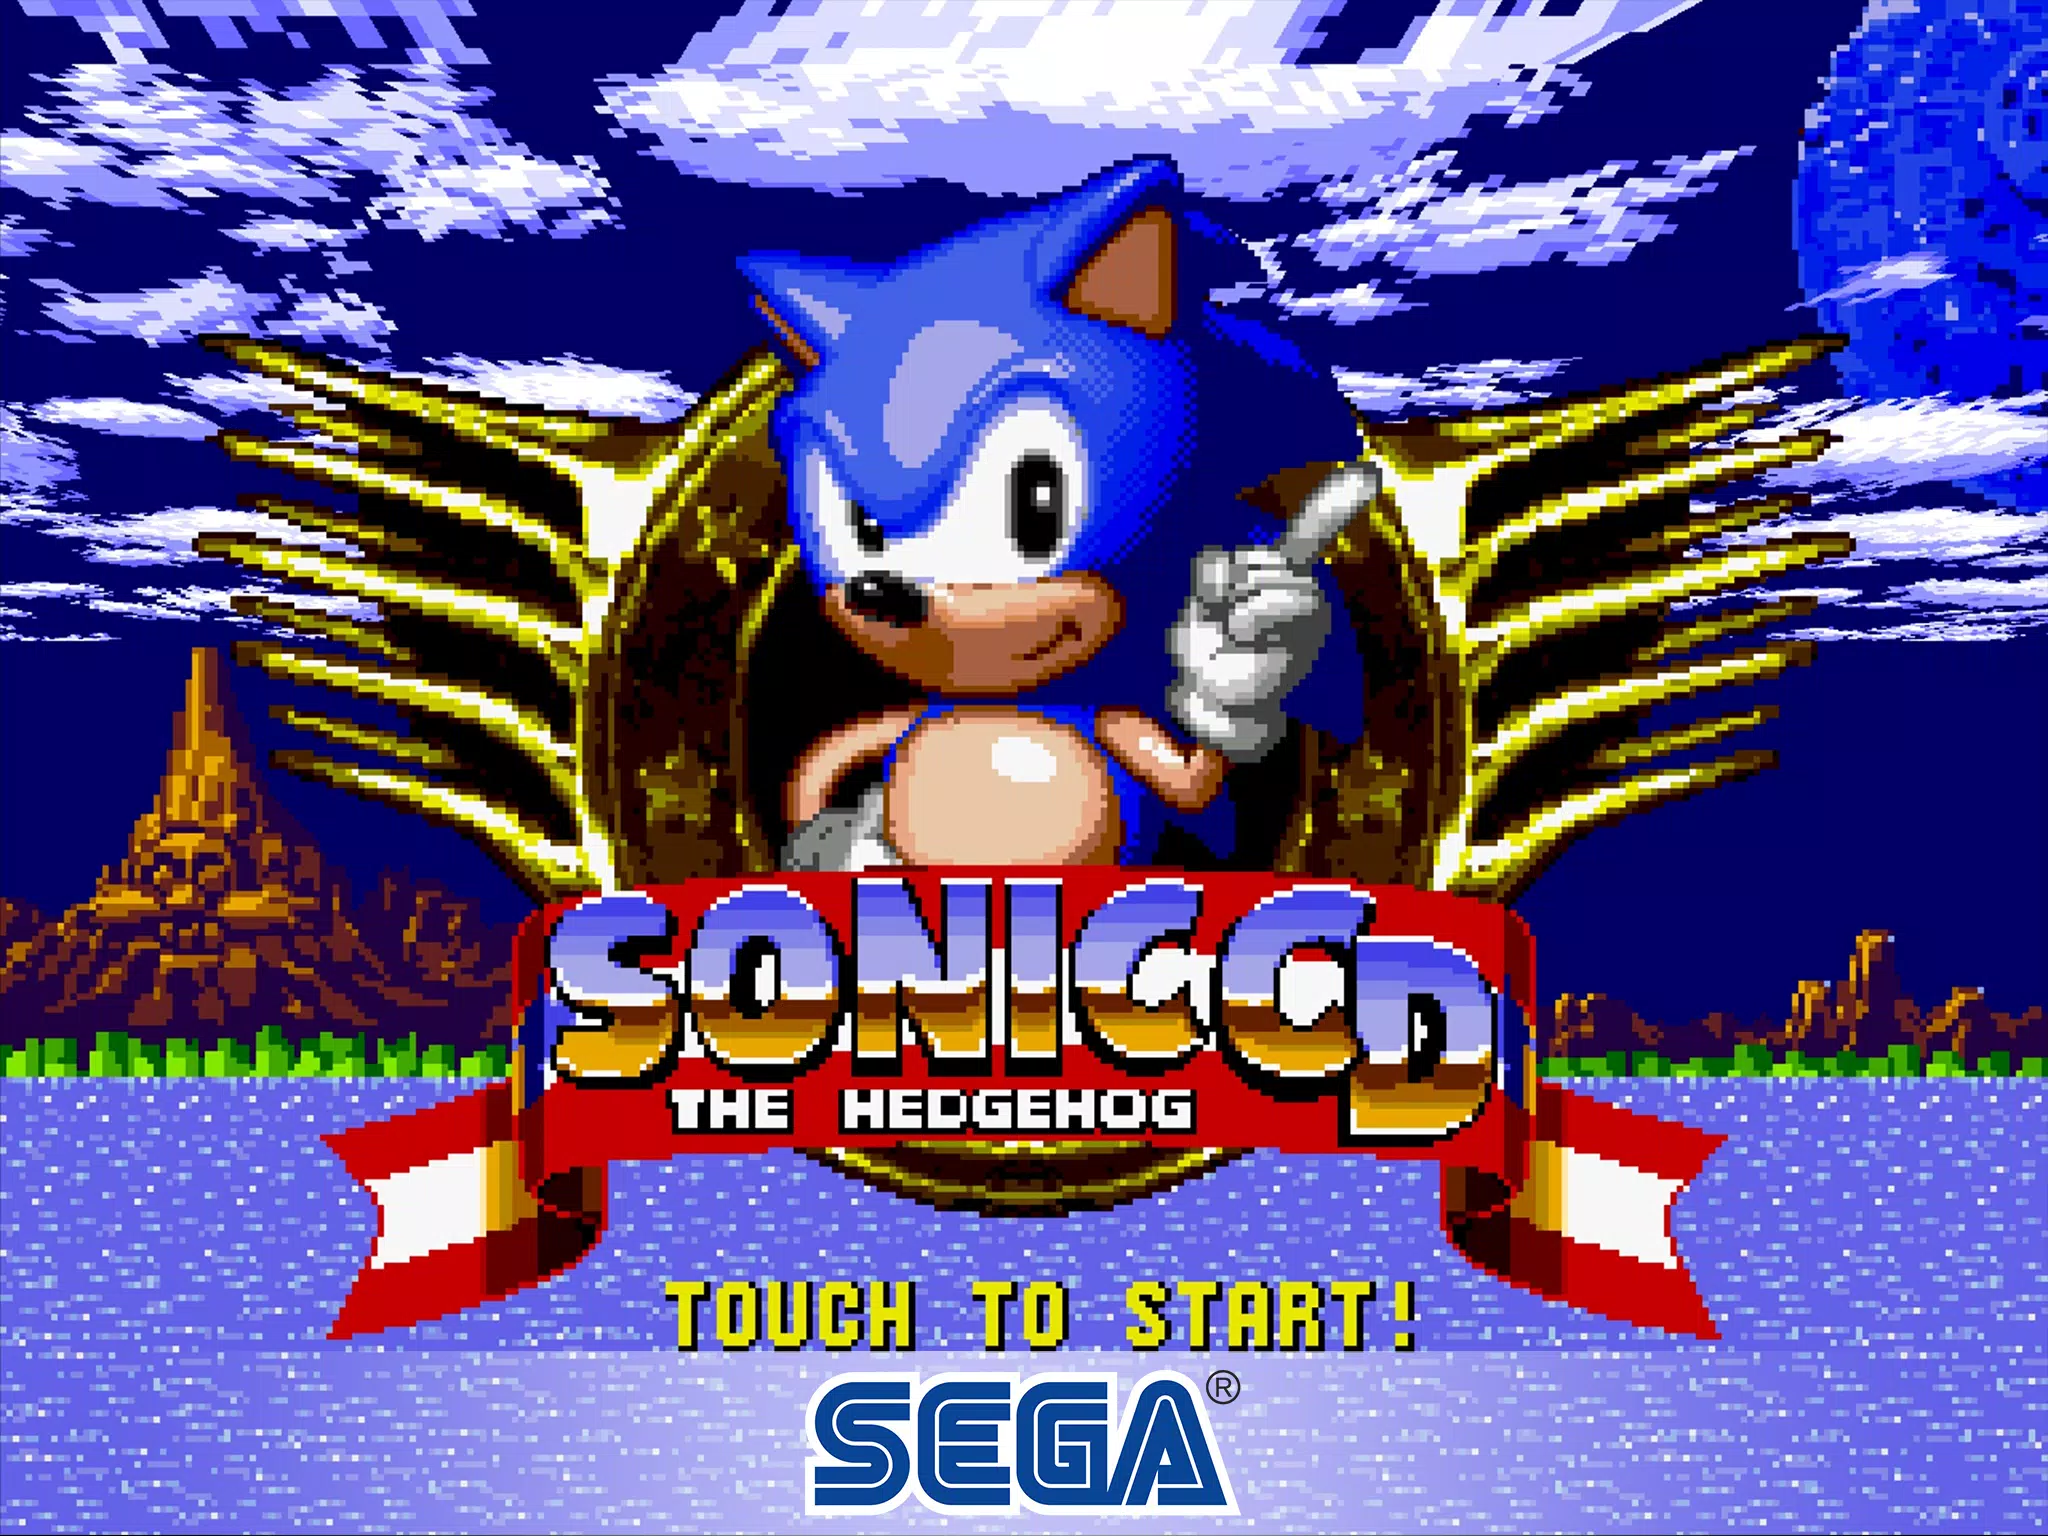 Download Sonic the Hedgehog™ Classic APK